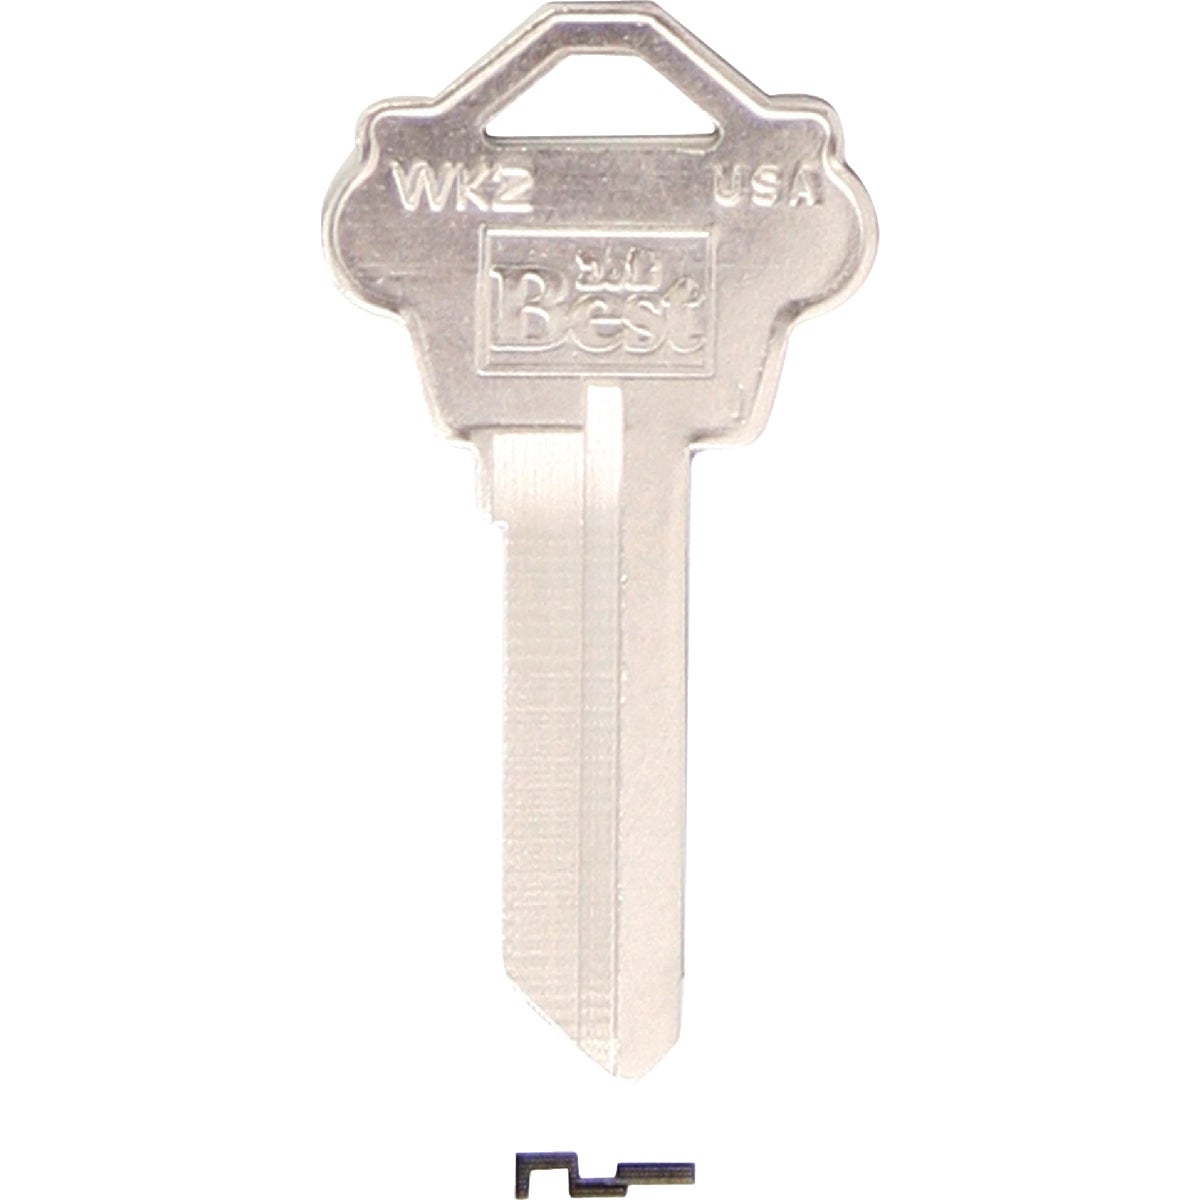 Item 237390, Nickel-plated key blank. Brass construction.